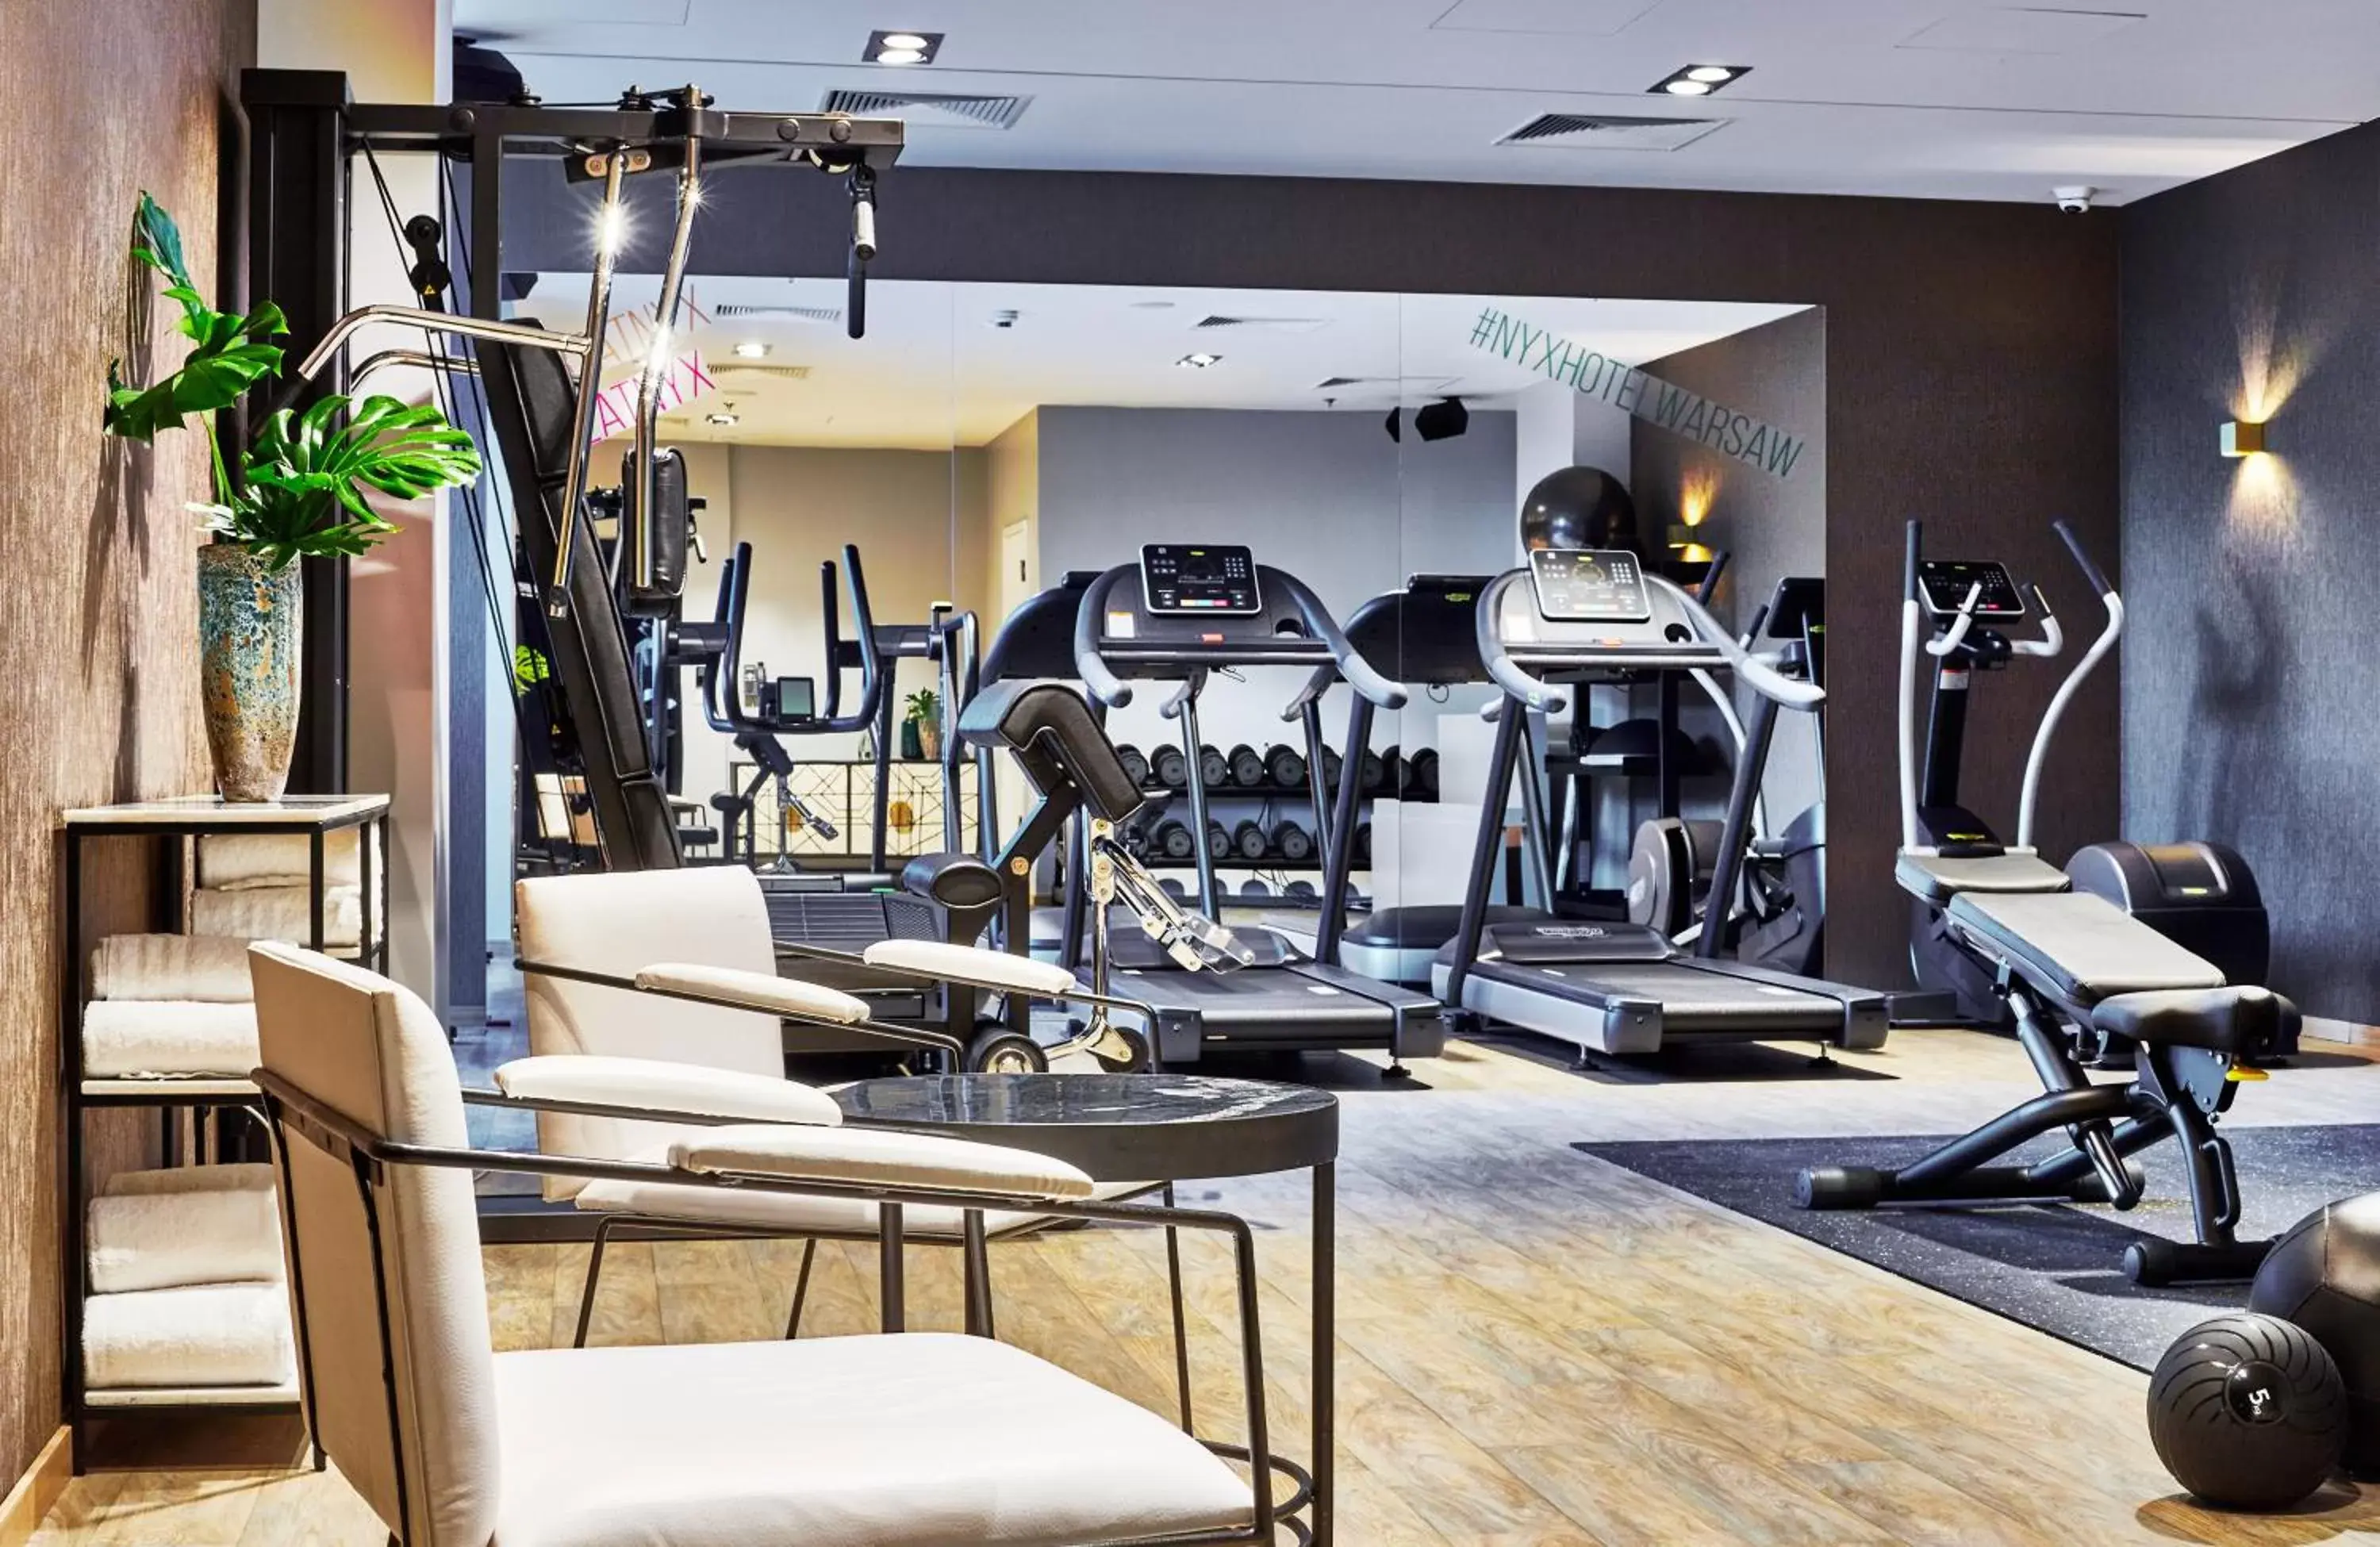 Fitness centre/facilities, Fitness Center/Facilities in NYX Hotel Warsaw by Leonardo Hotels